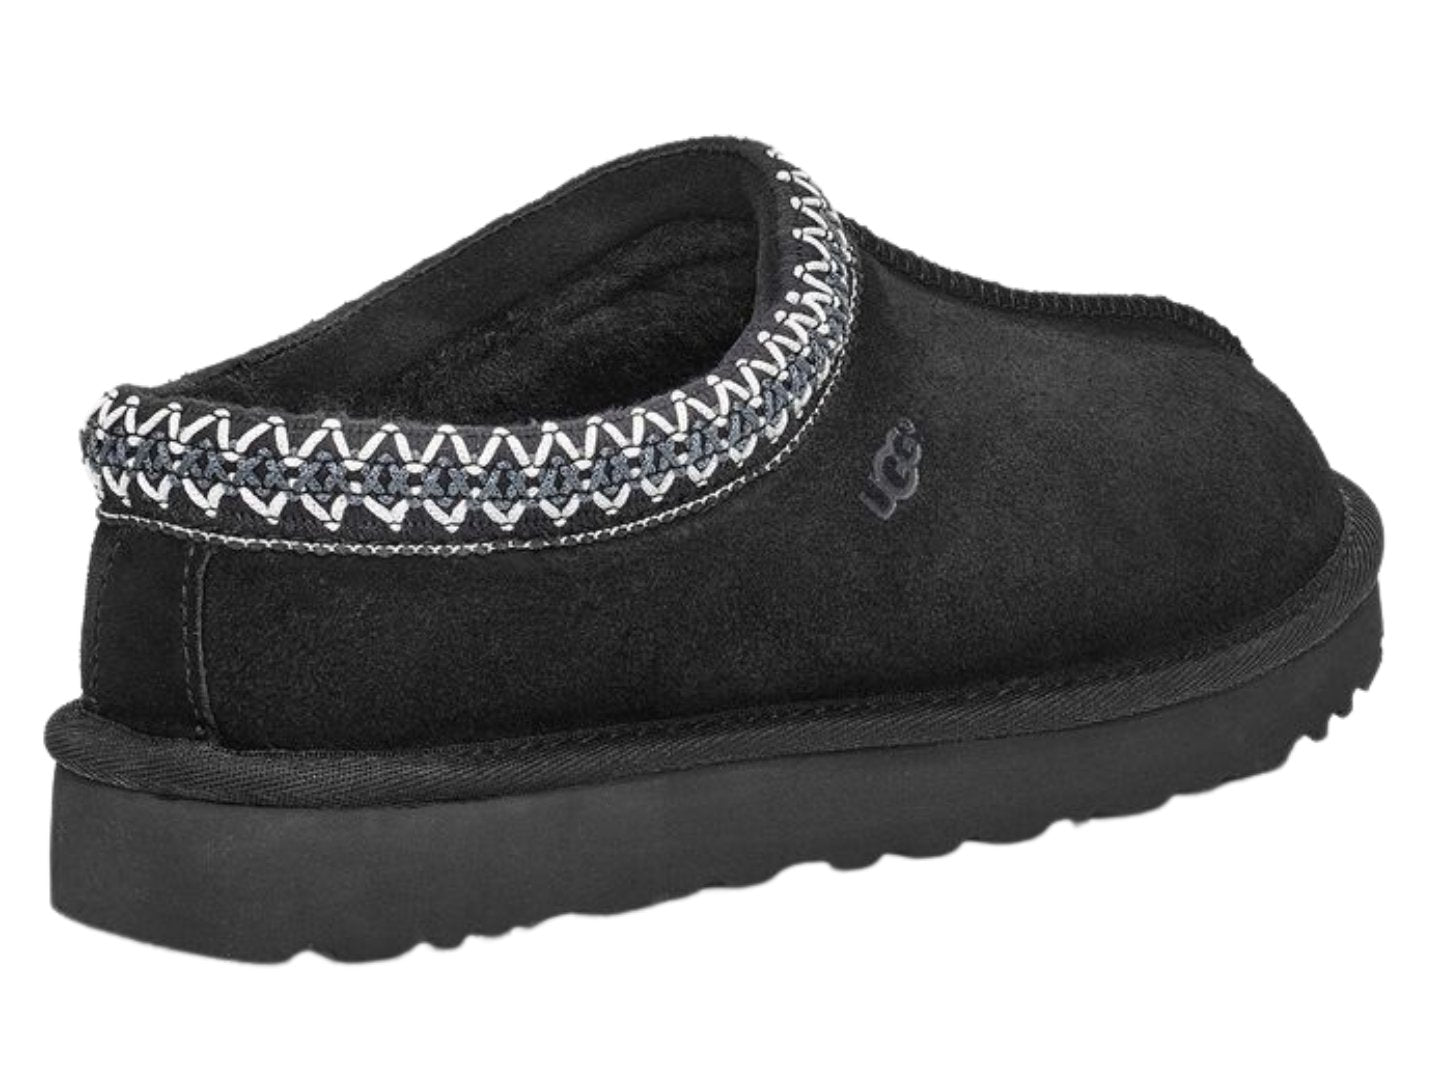 UGG Women's TASMAN GRAPHIC MONOGRAM BLACK Slippers Shoes 7US